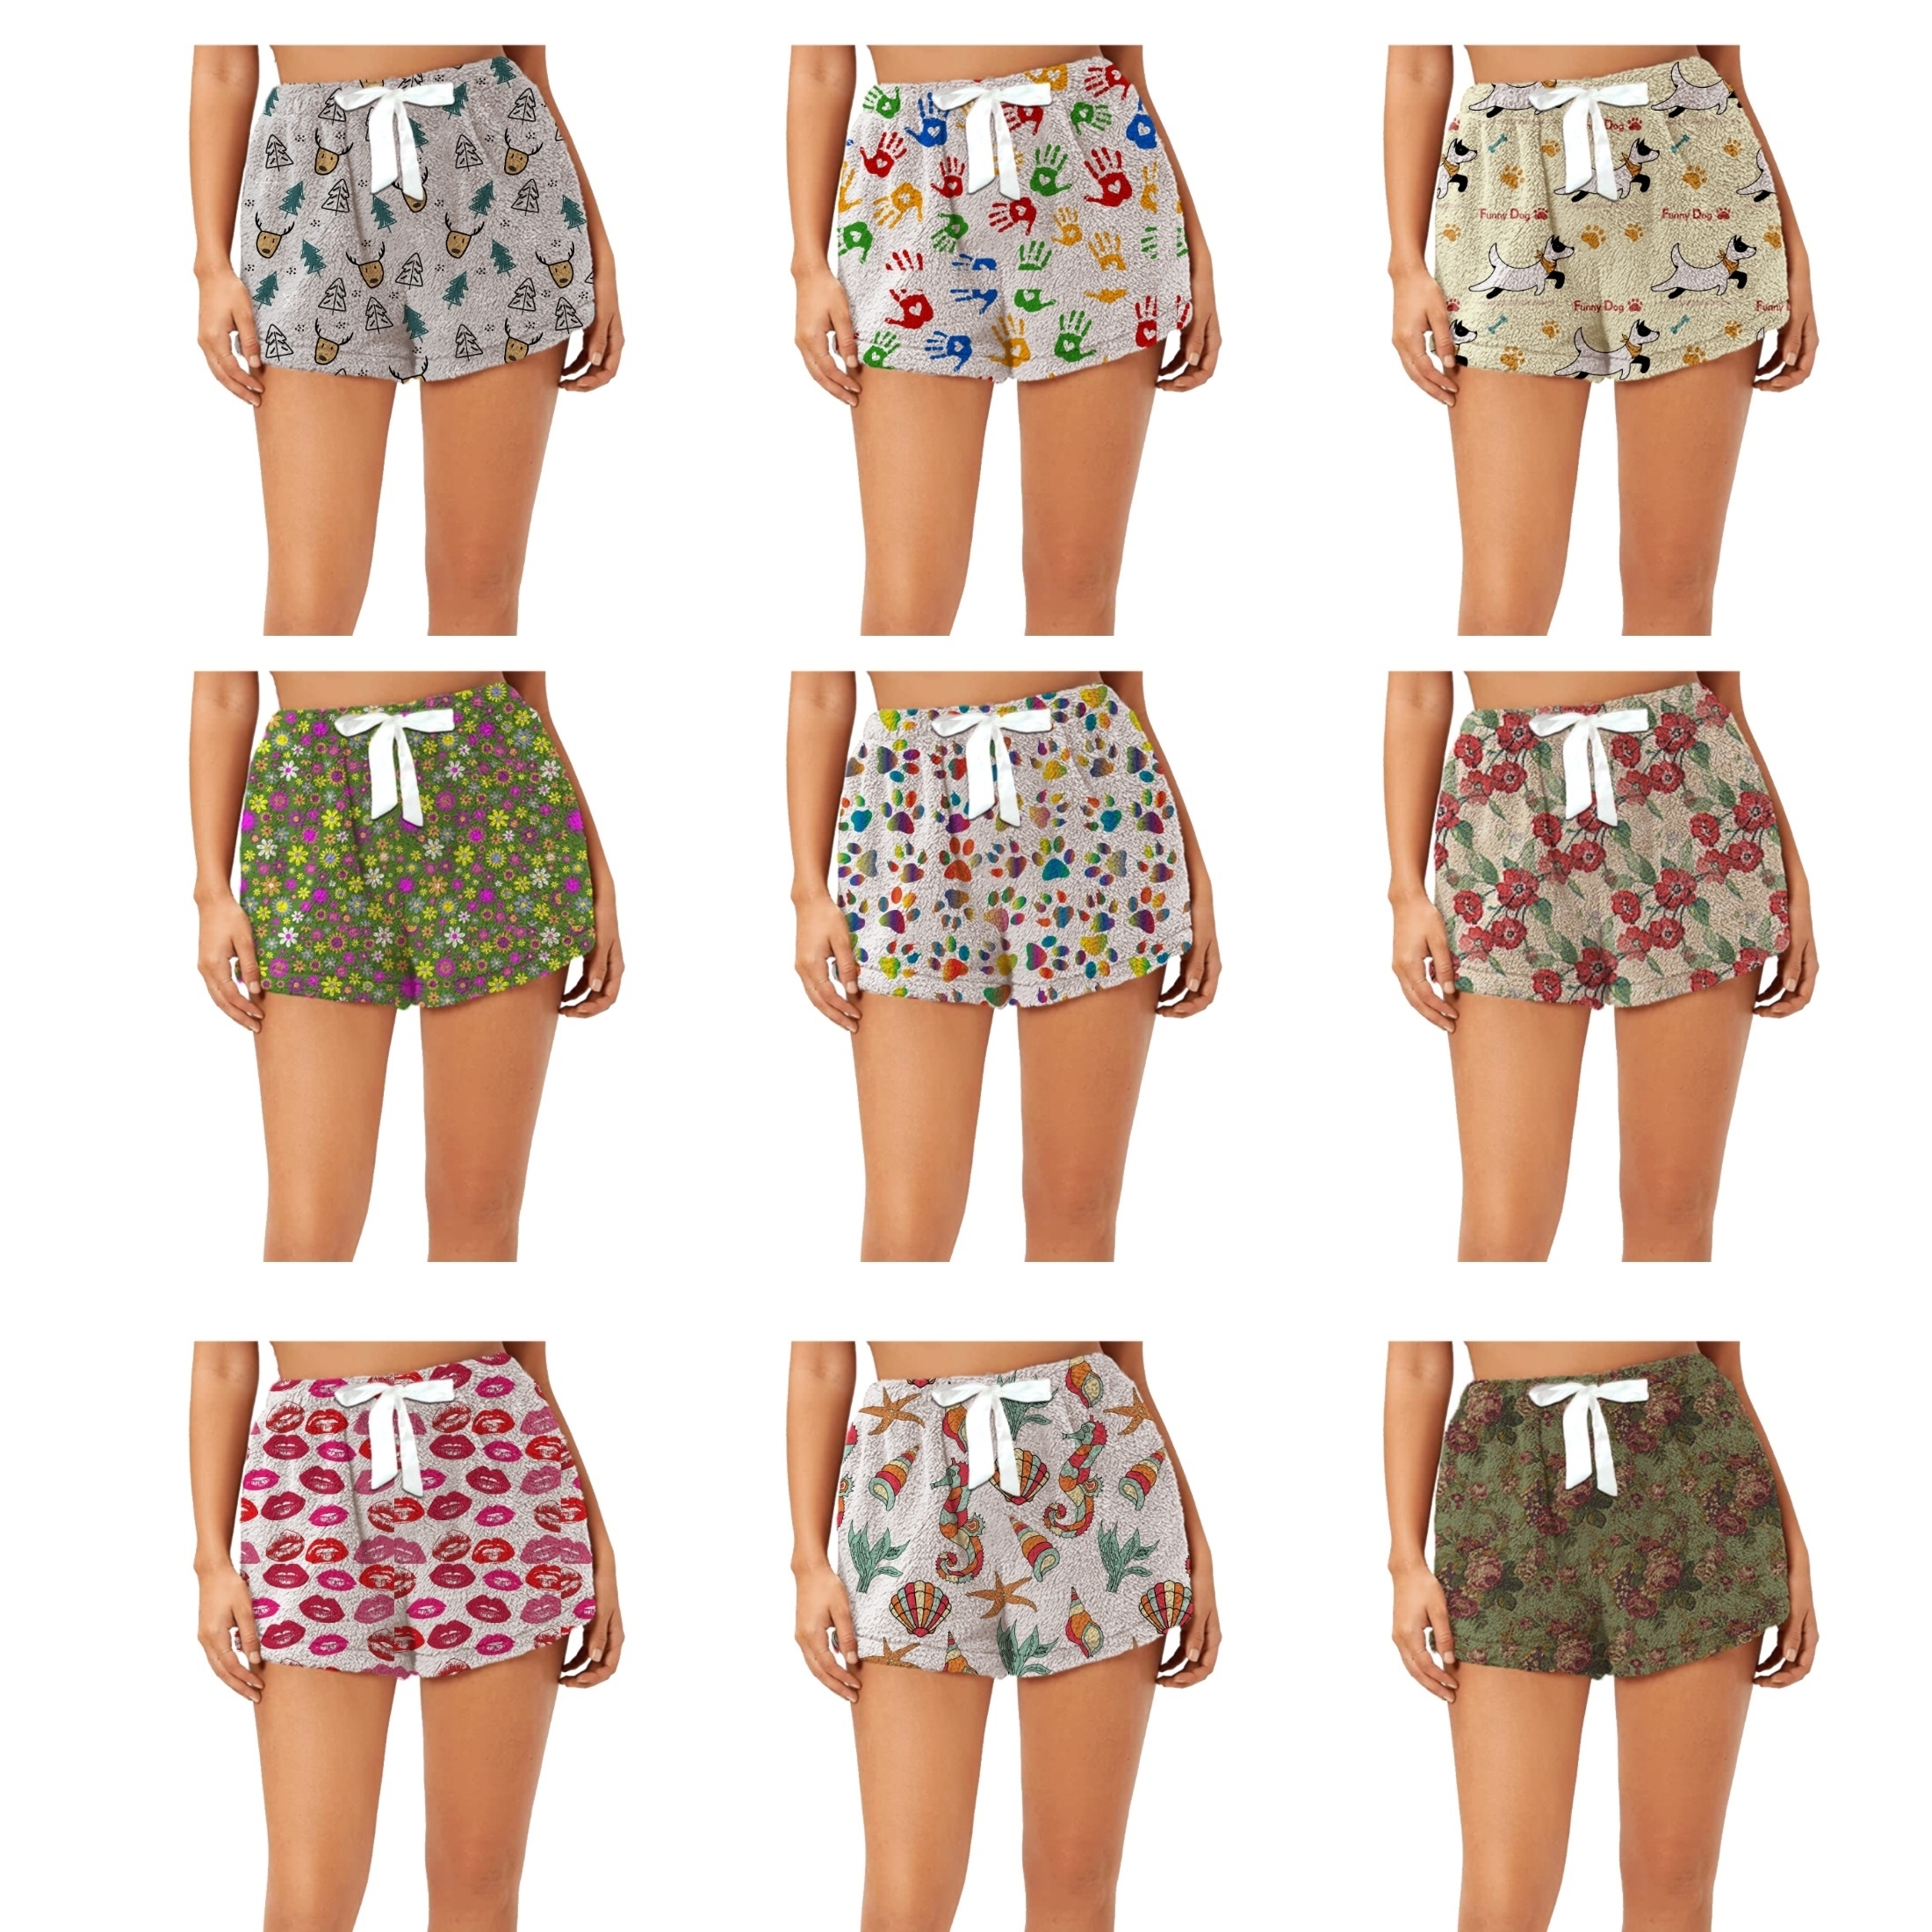 3-Pack: Women's Super Soft Micro Fleece Ultra Plush Printed Pajama Shorts - Large